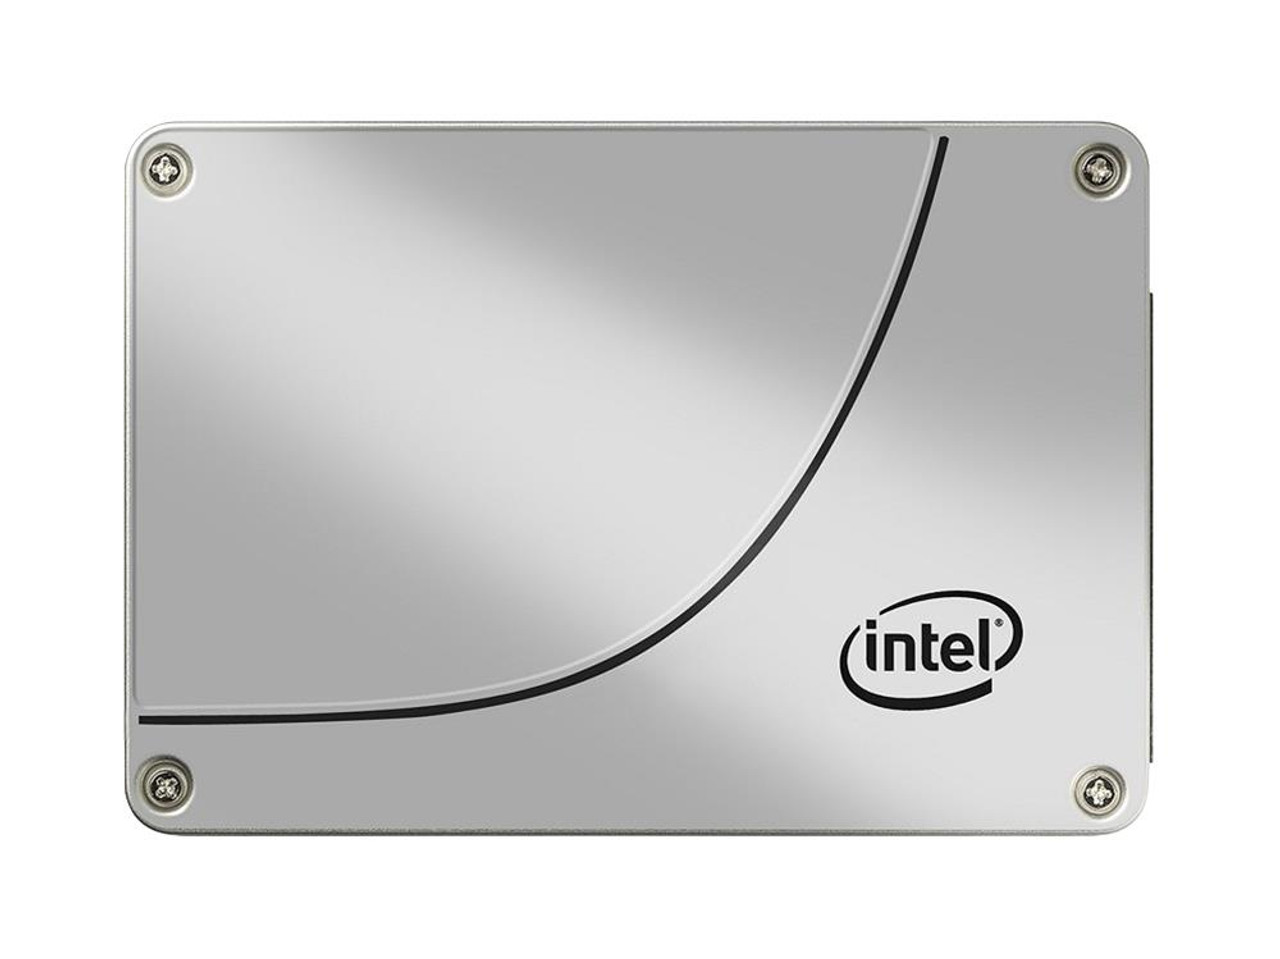 SSDSA2CW160G310913234 Intel 320 Series 160GB MLC SATA 3Gbps 2.5-inch Internal Solid State Drive (SSD)